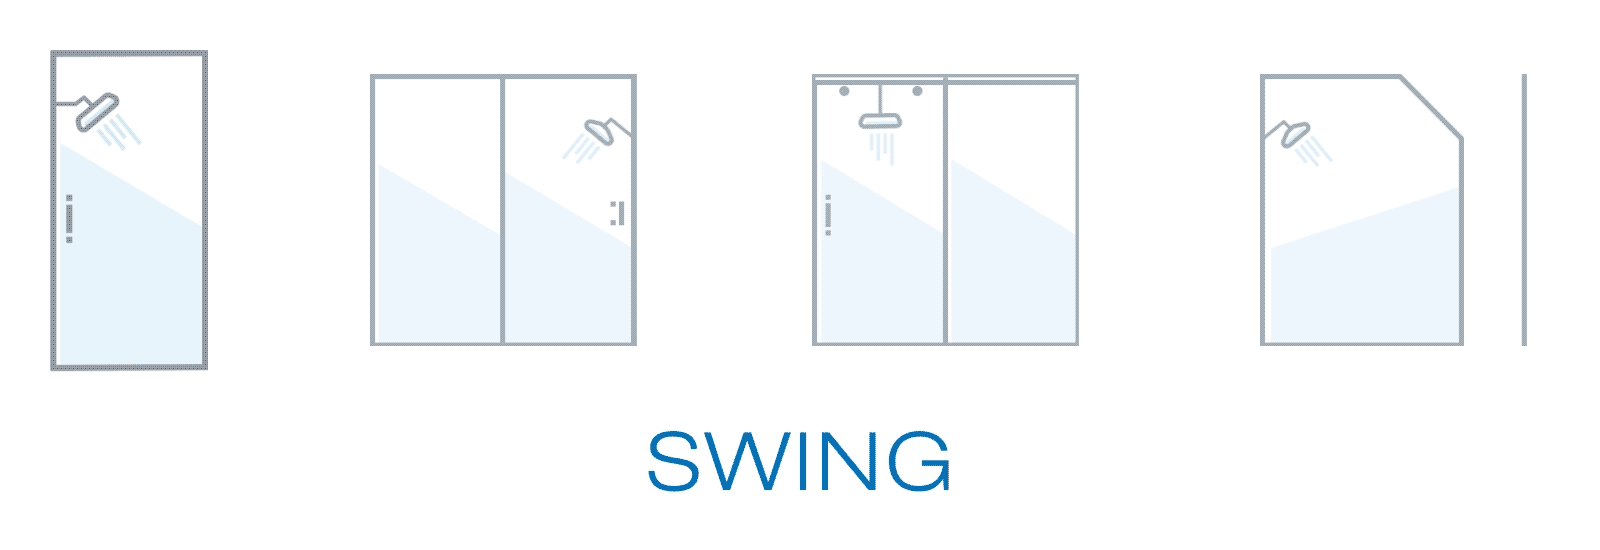 Swing, Sliding, Rolling, and Panel Showering Door Openings